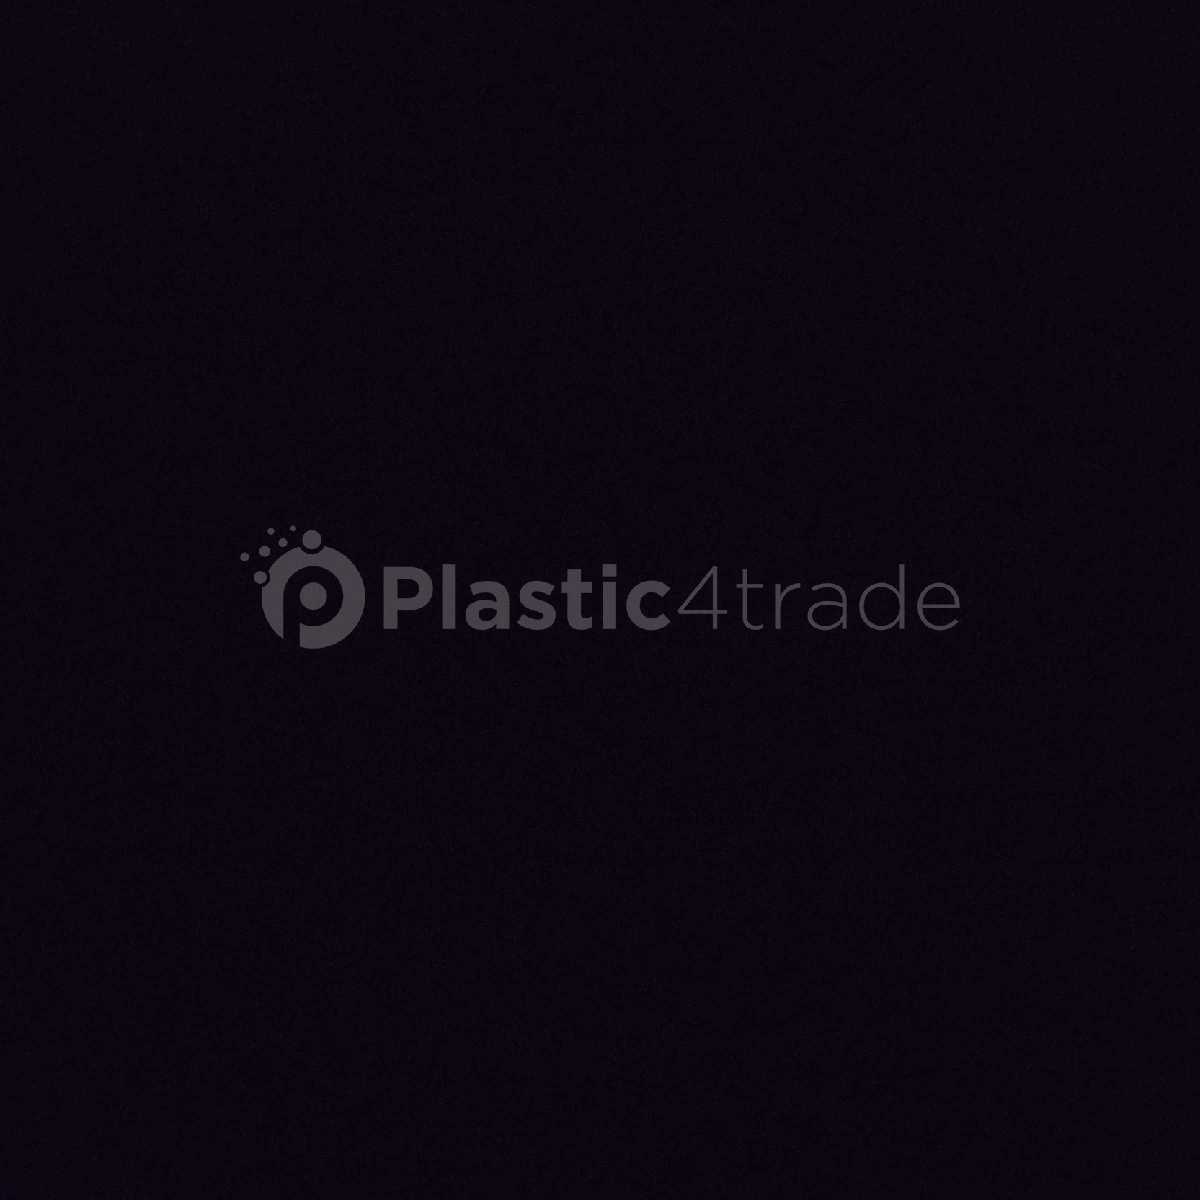 RP PLASTIC SUTLI PP Off Grade RAFFIA gujarat india Plastic4trade